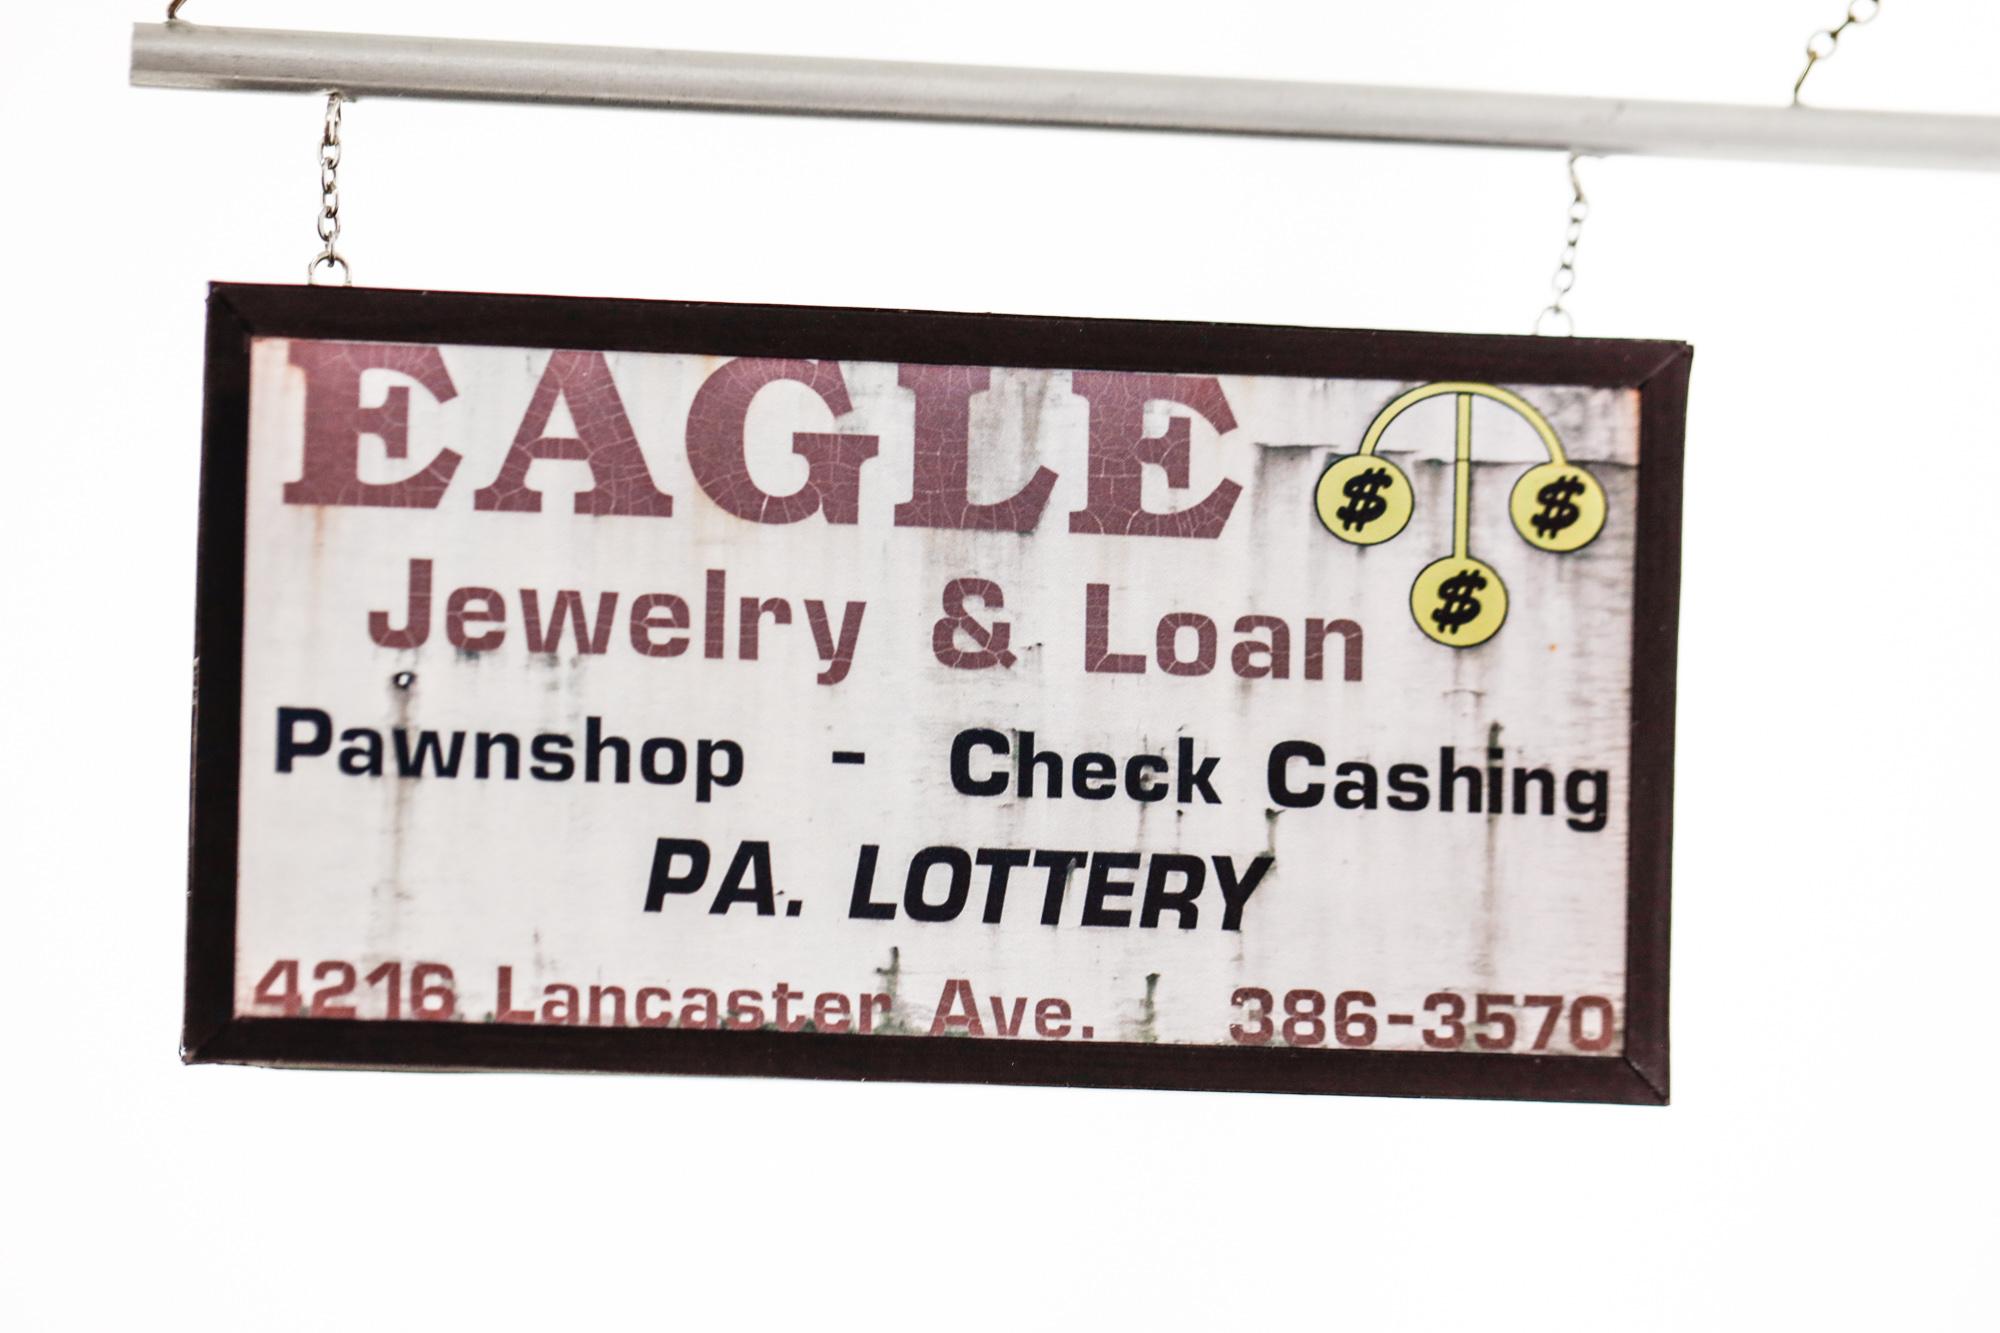 Eagle Jewelry & Loan - Sculpture by Drew Leshko